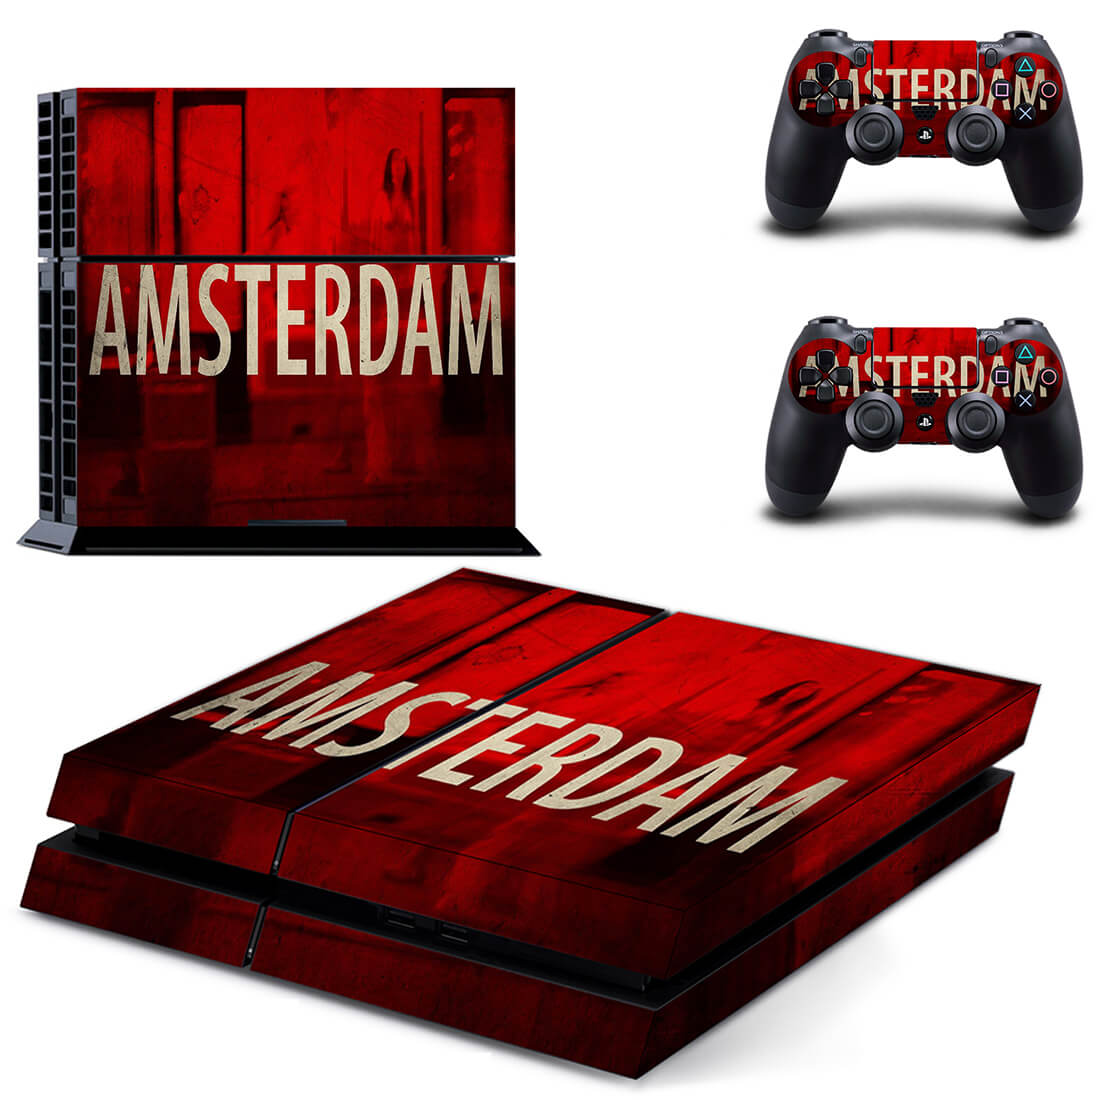 Amsterdam PS4 skin